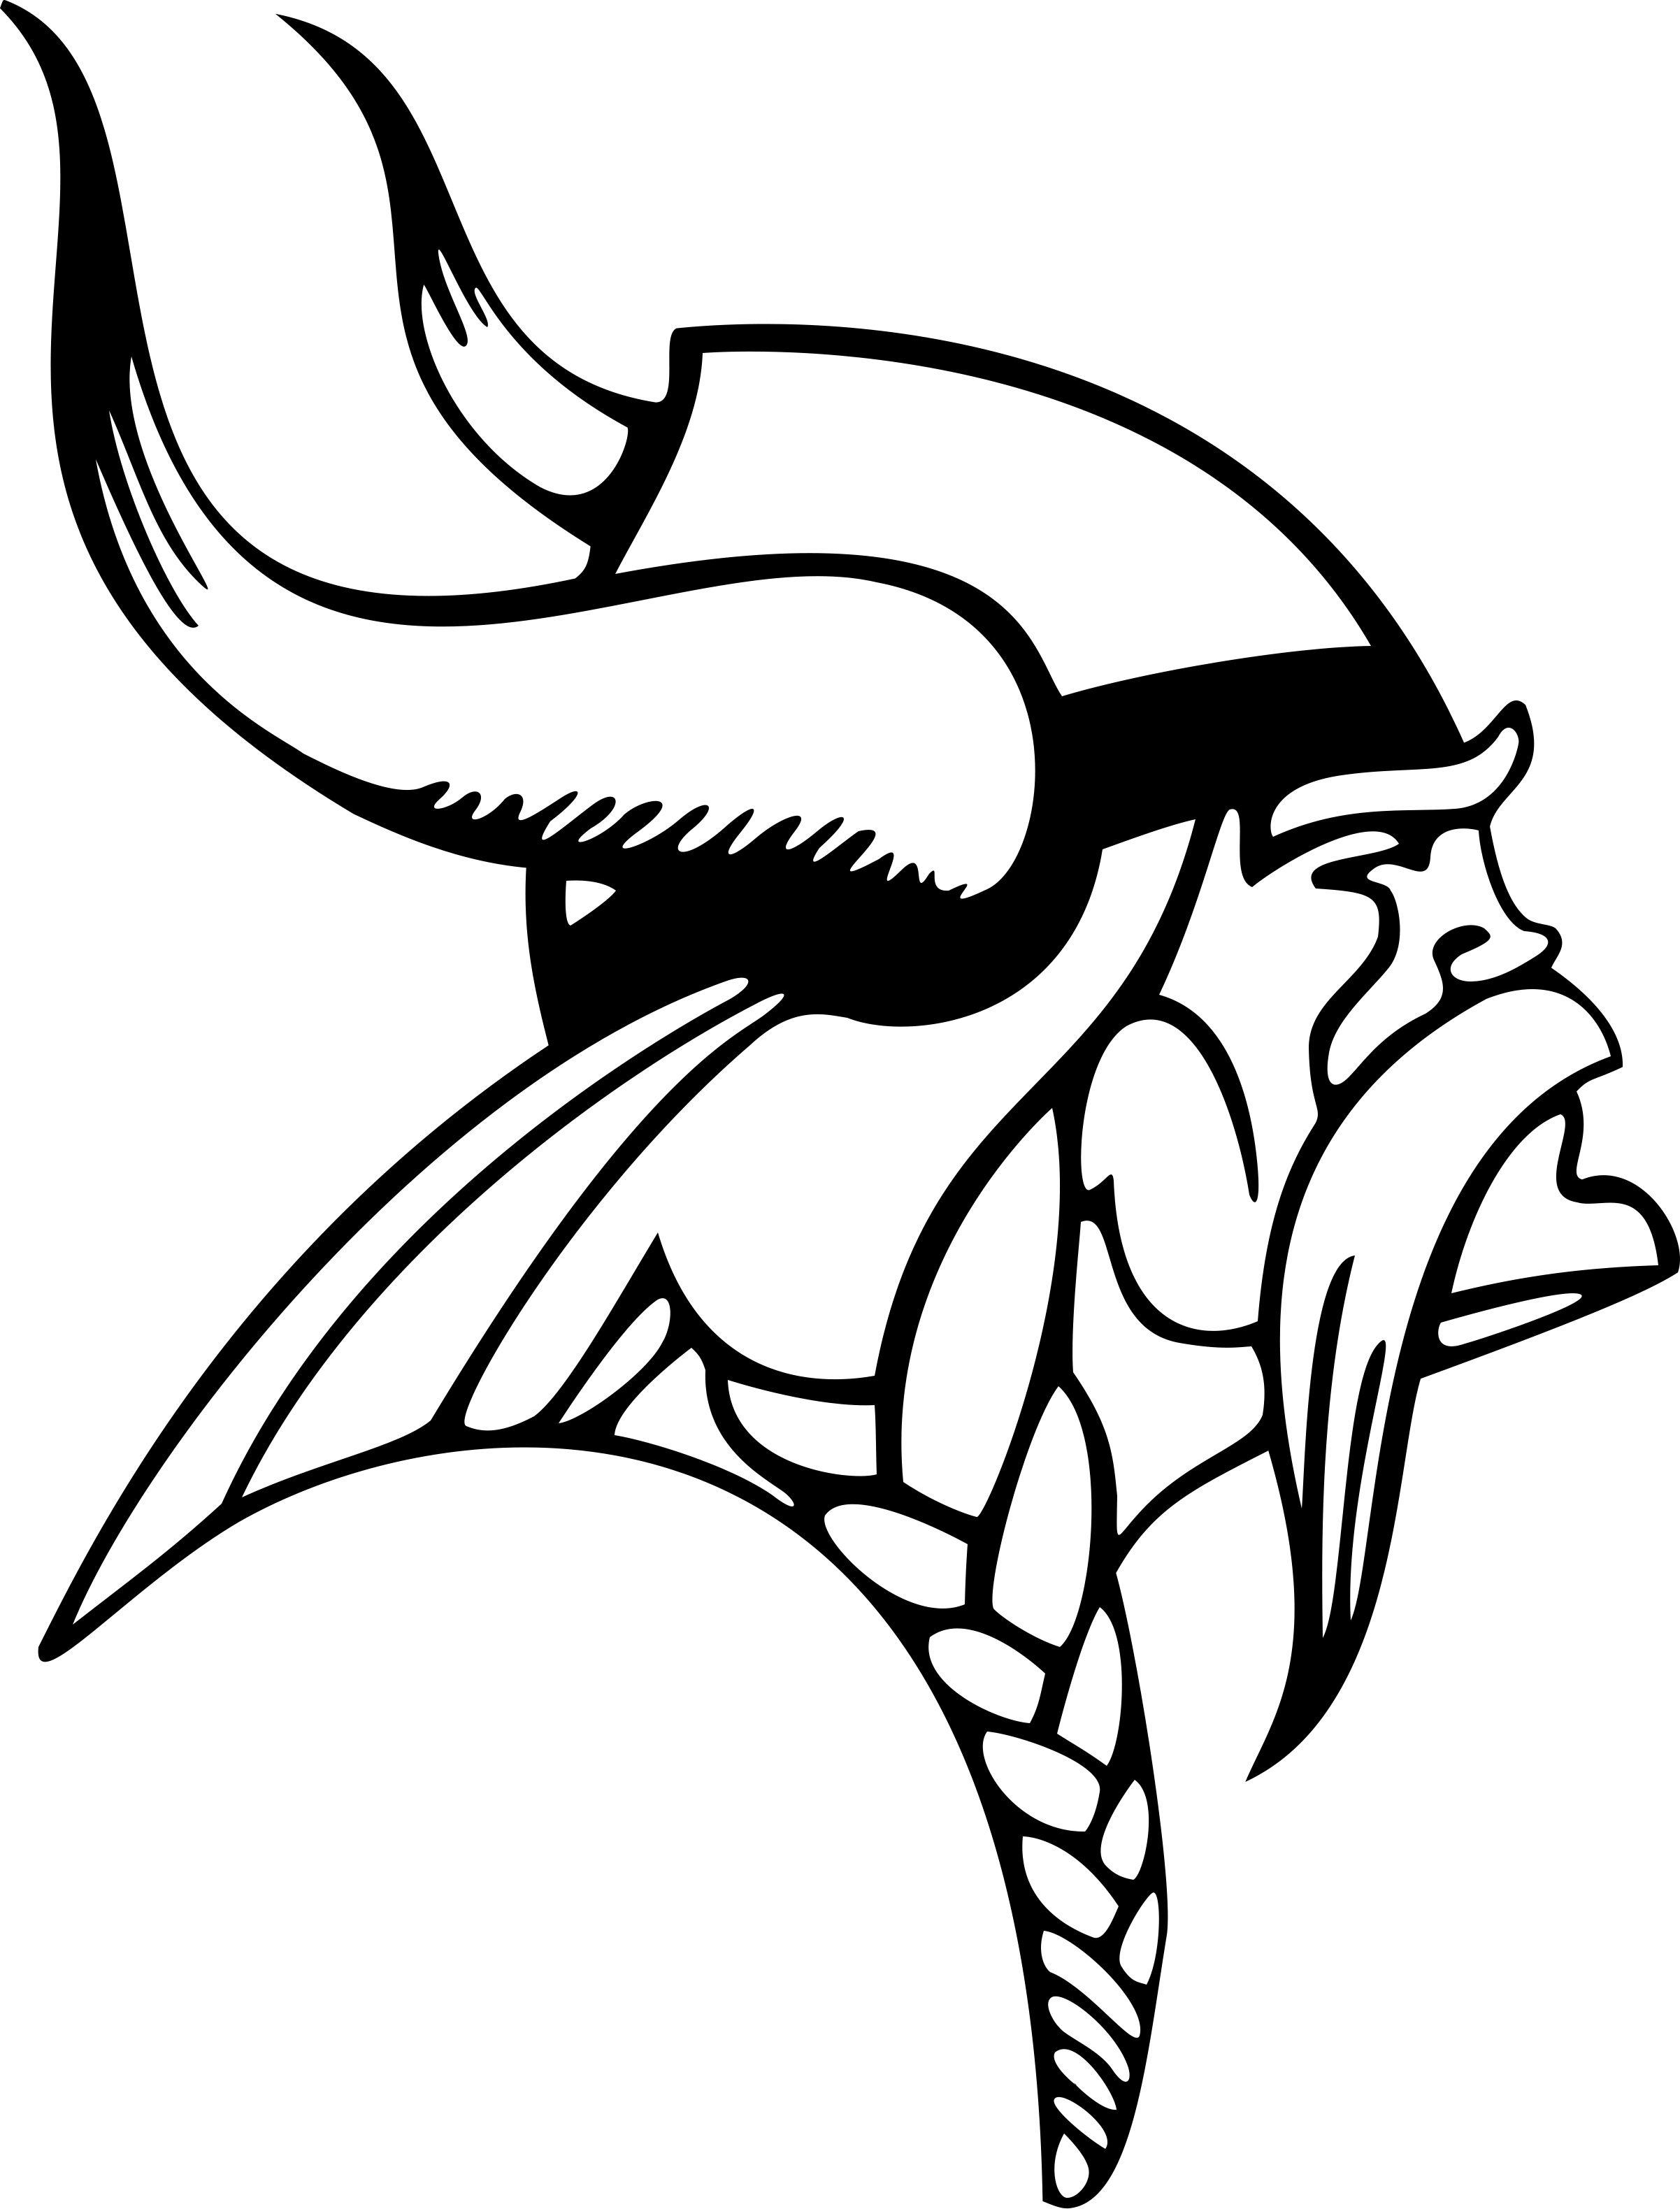 Black Viking Logo - Minnesota Vikings Clipart Group with 72+ items